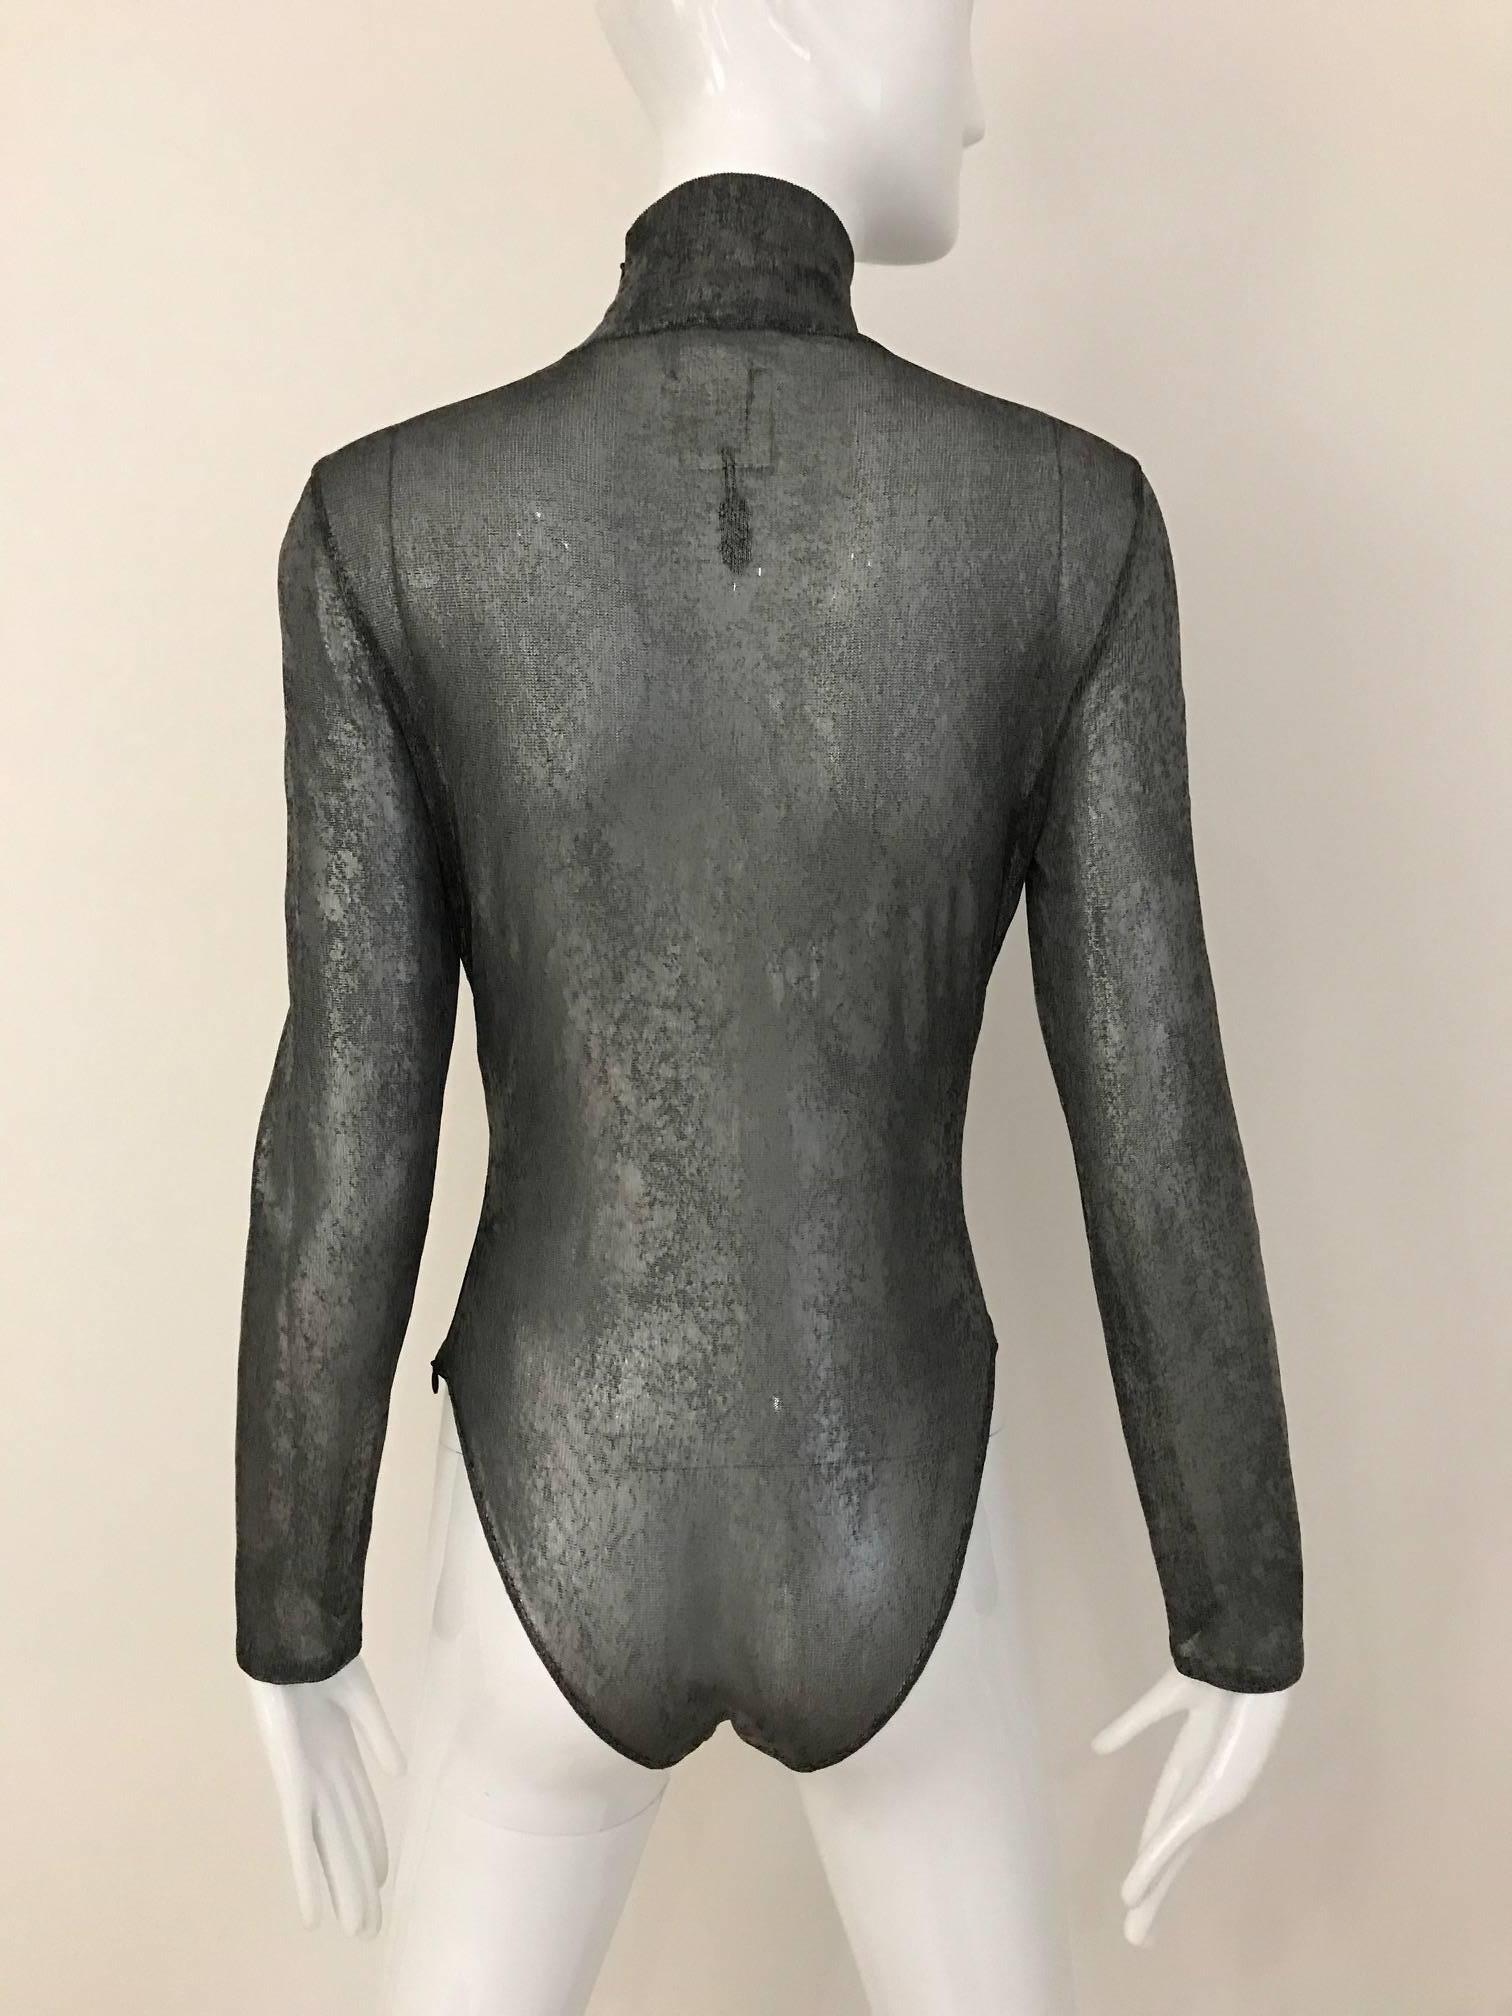 silver metallic bodysuit